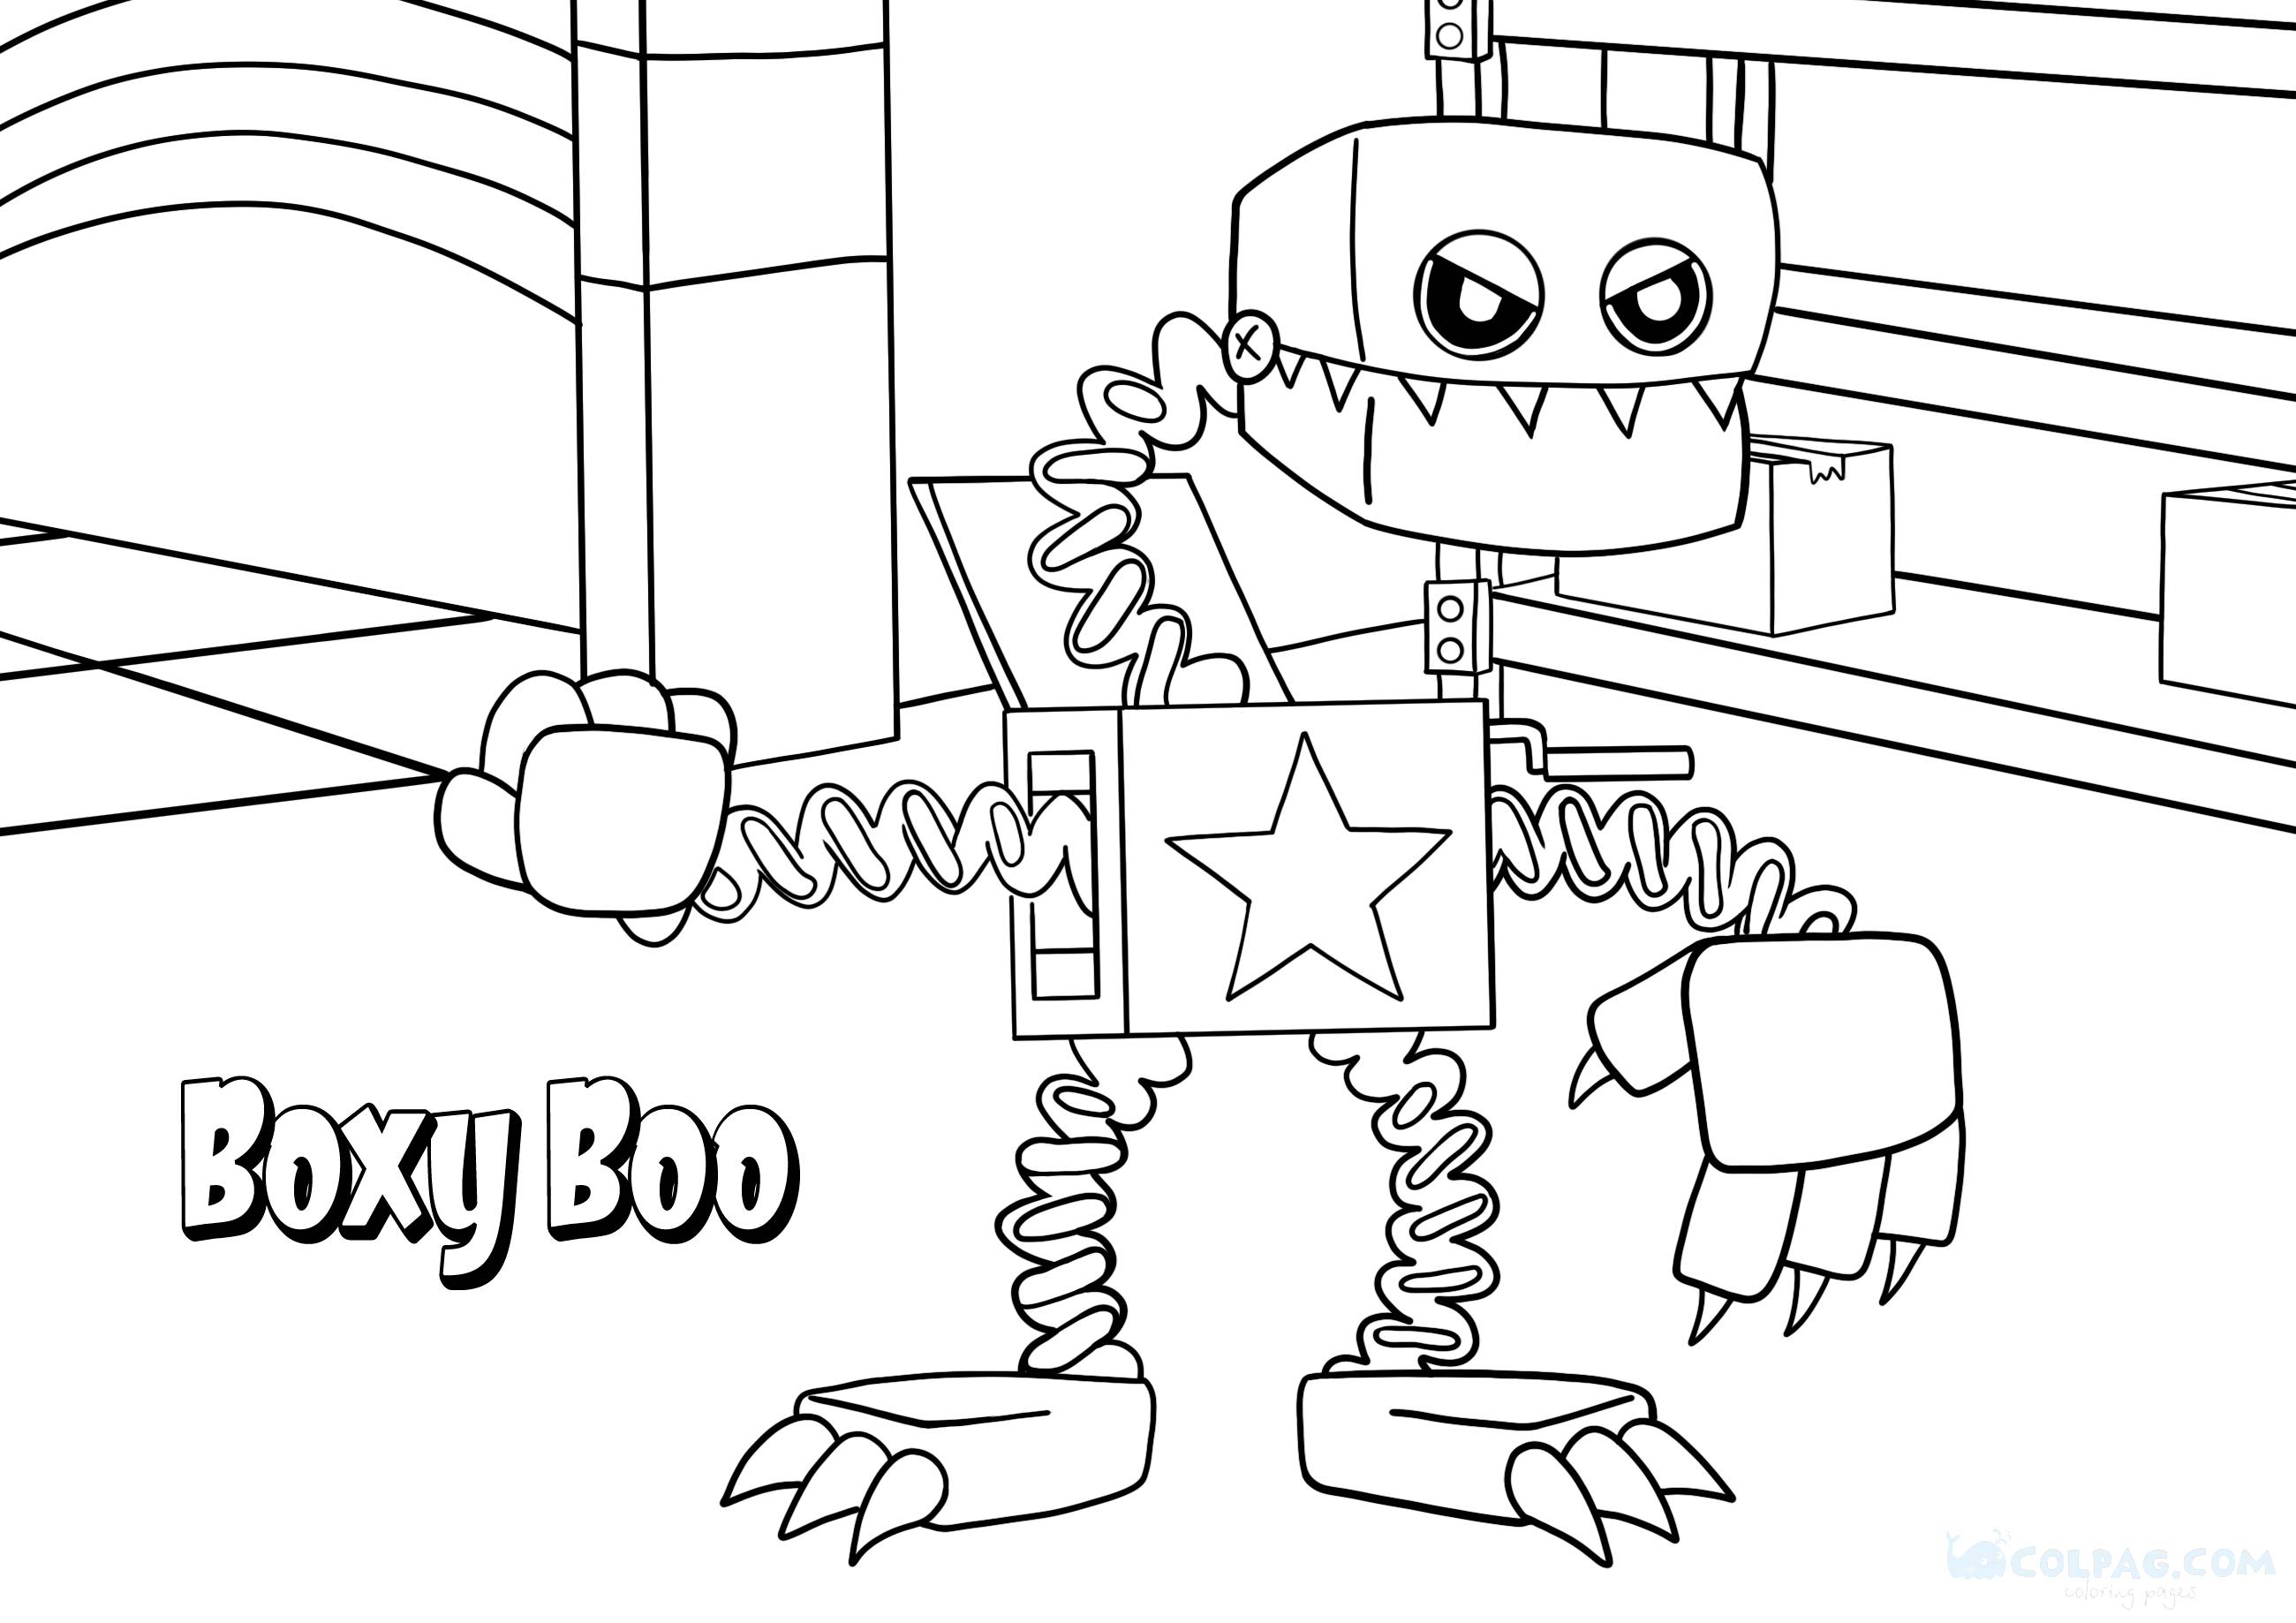 Kolorowanki Boxy Boo (Projekt: Playtime)